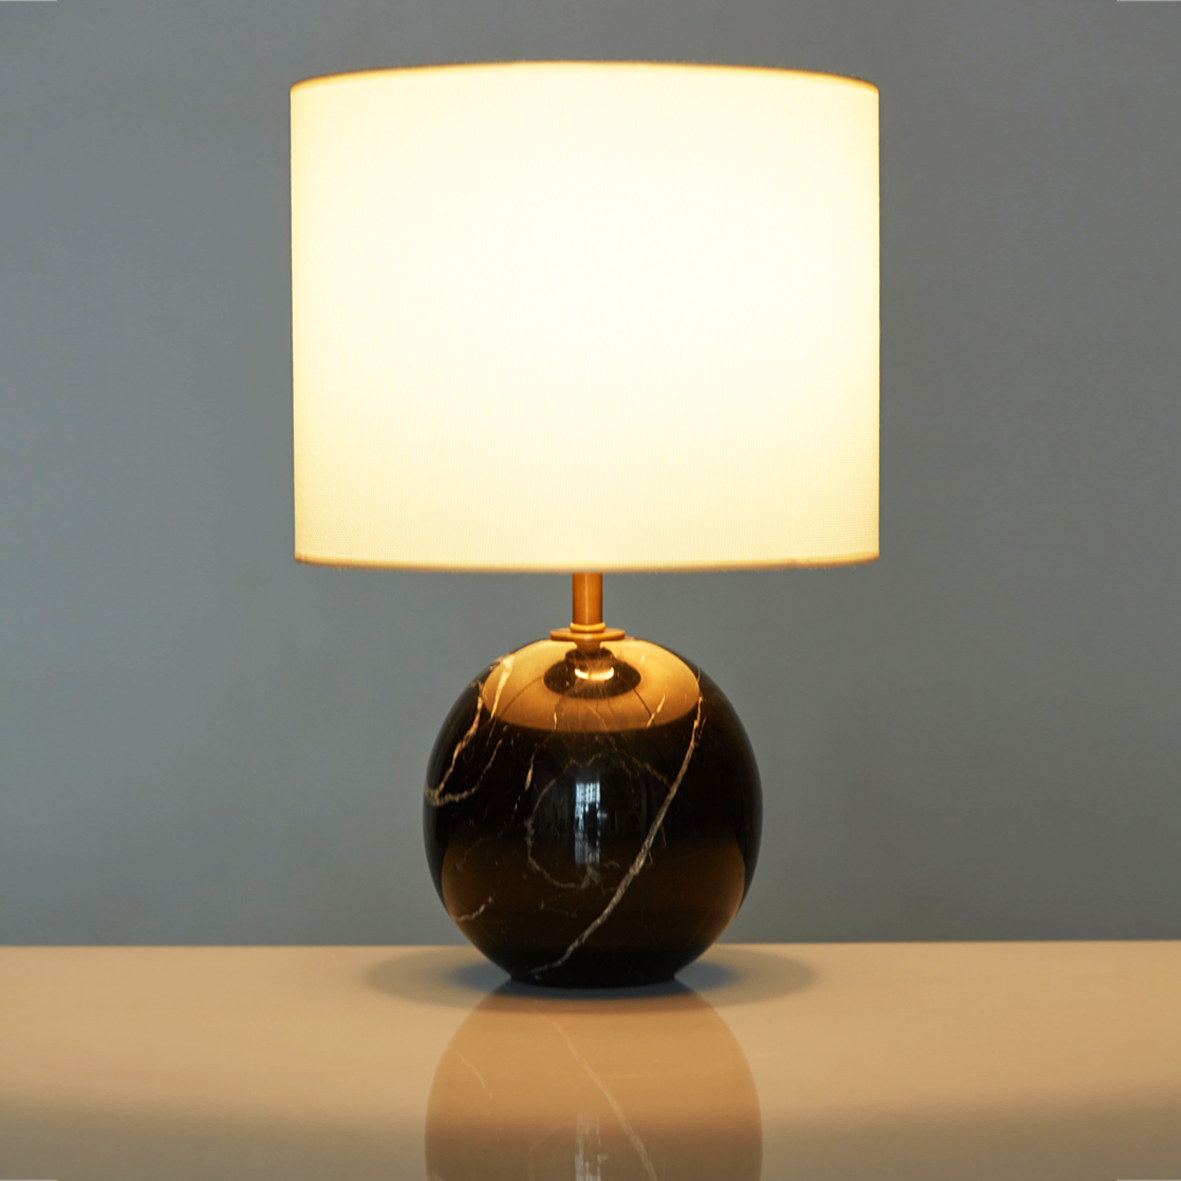 round-black-table-lamp